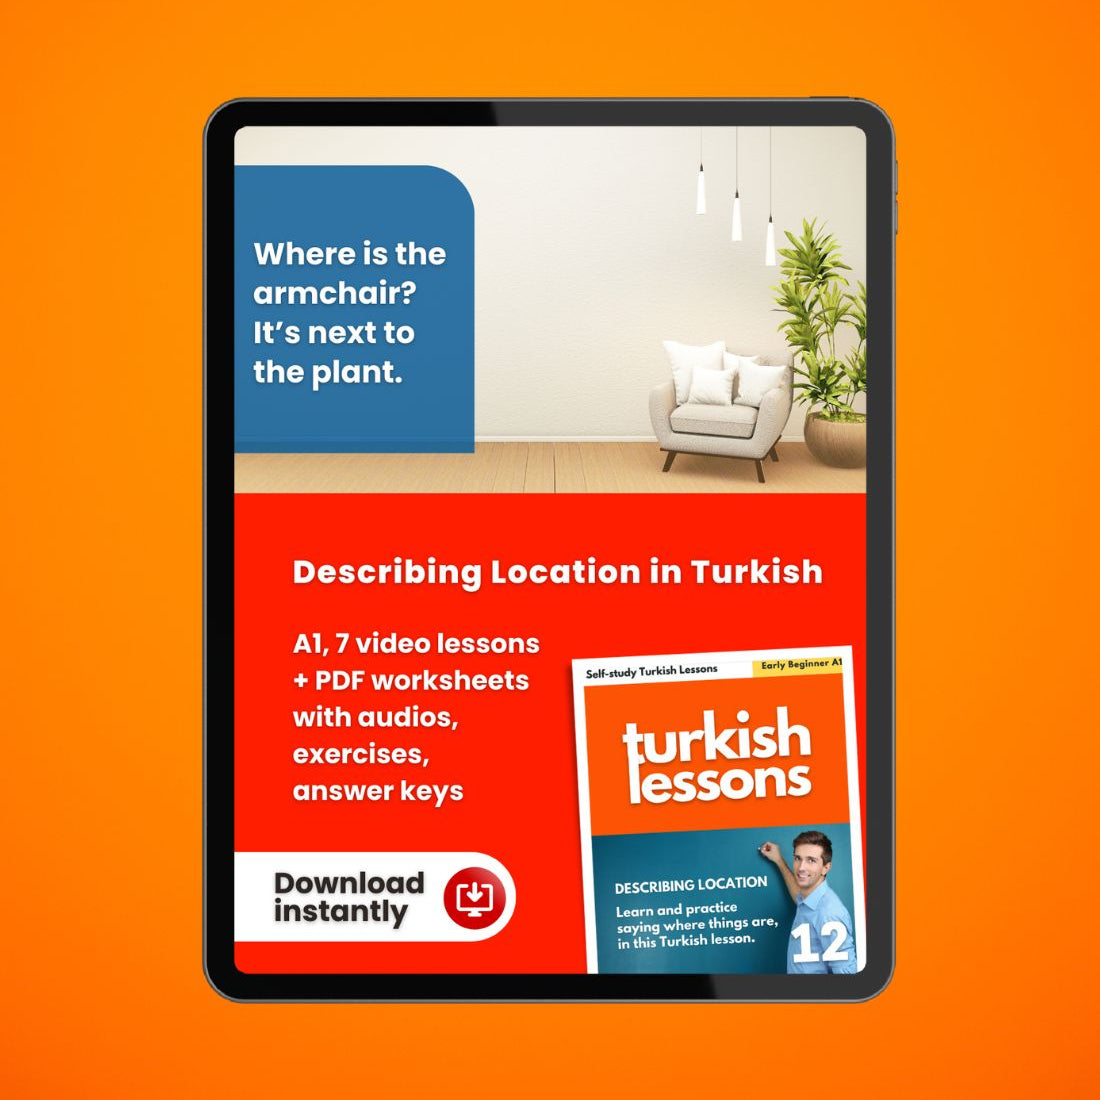 turkish lessons a1 - describing location in turkish language